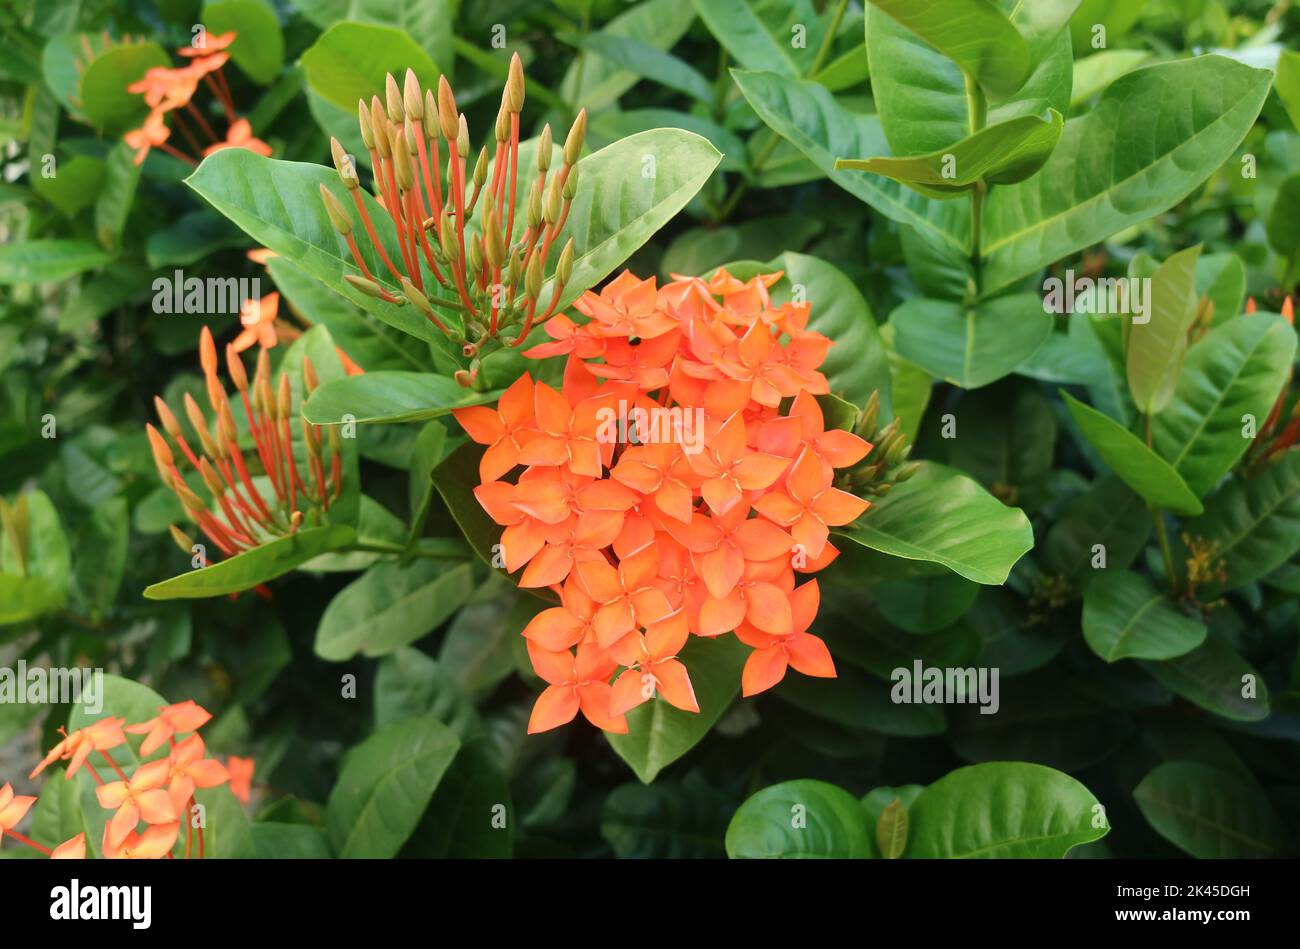 Vivid Orange West Indian Jasmine Flowers Blossoming on the Shrubs Stock Photo